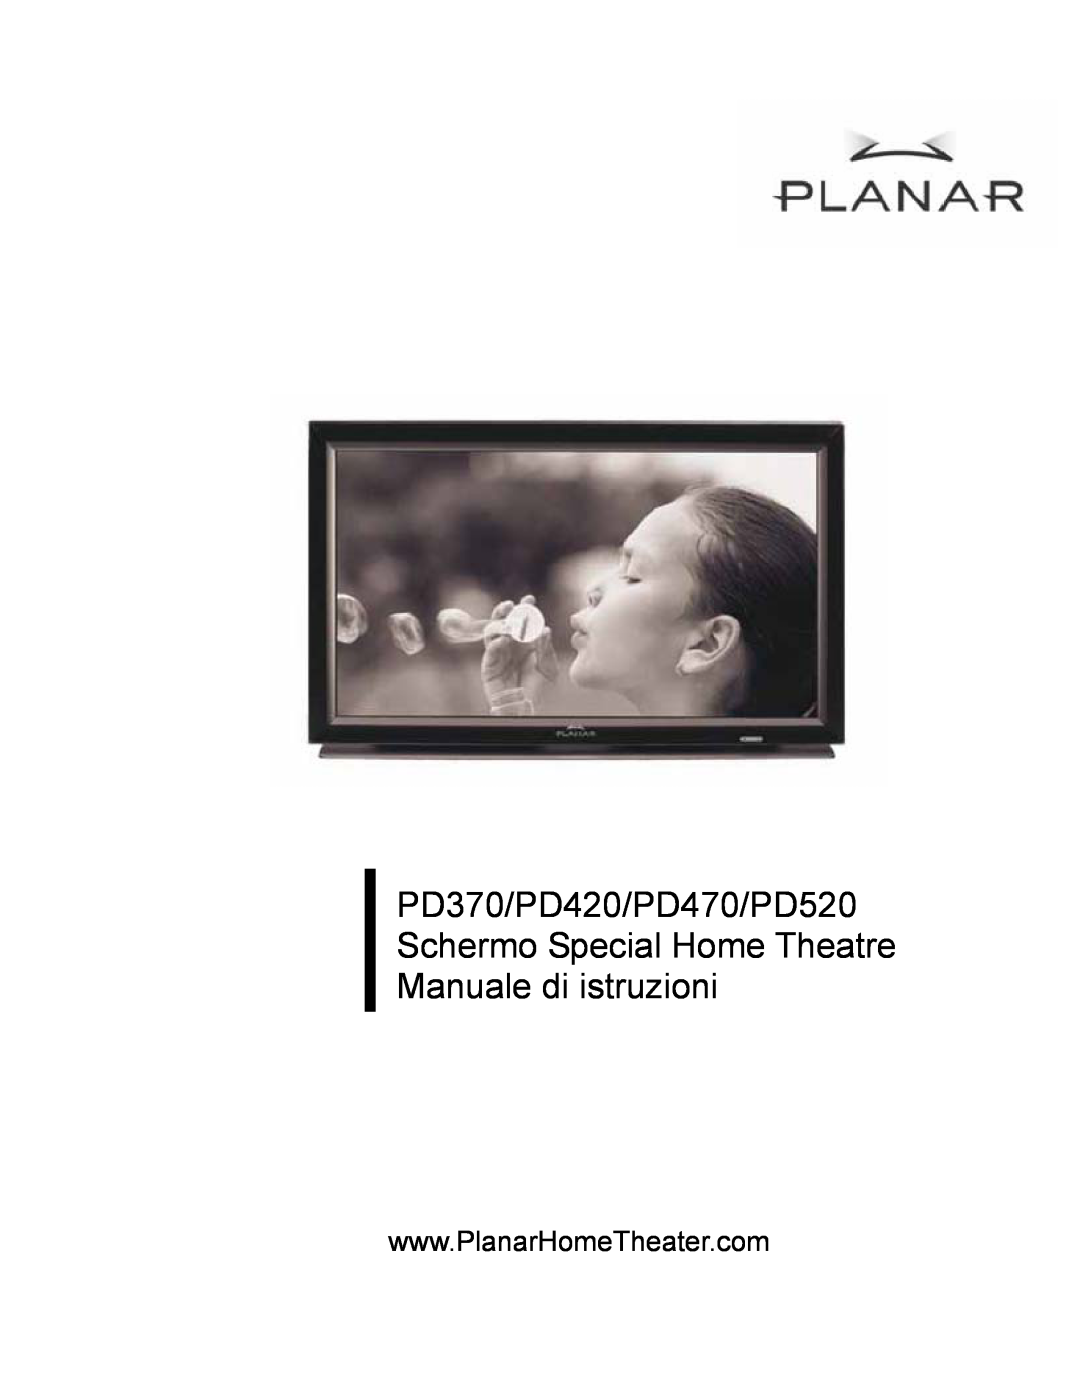 Planar manual PD520 Full-HD-Flachdisplay, Bedienungshandbuch 